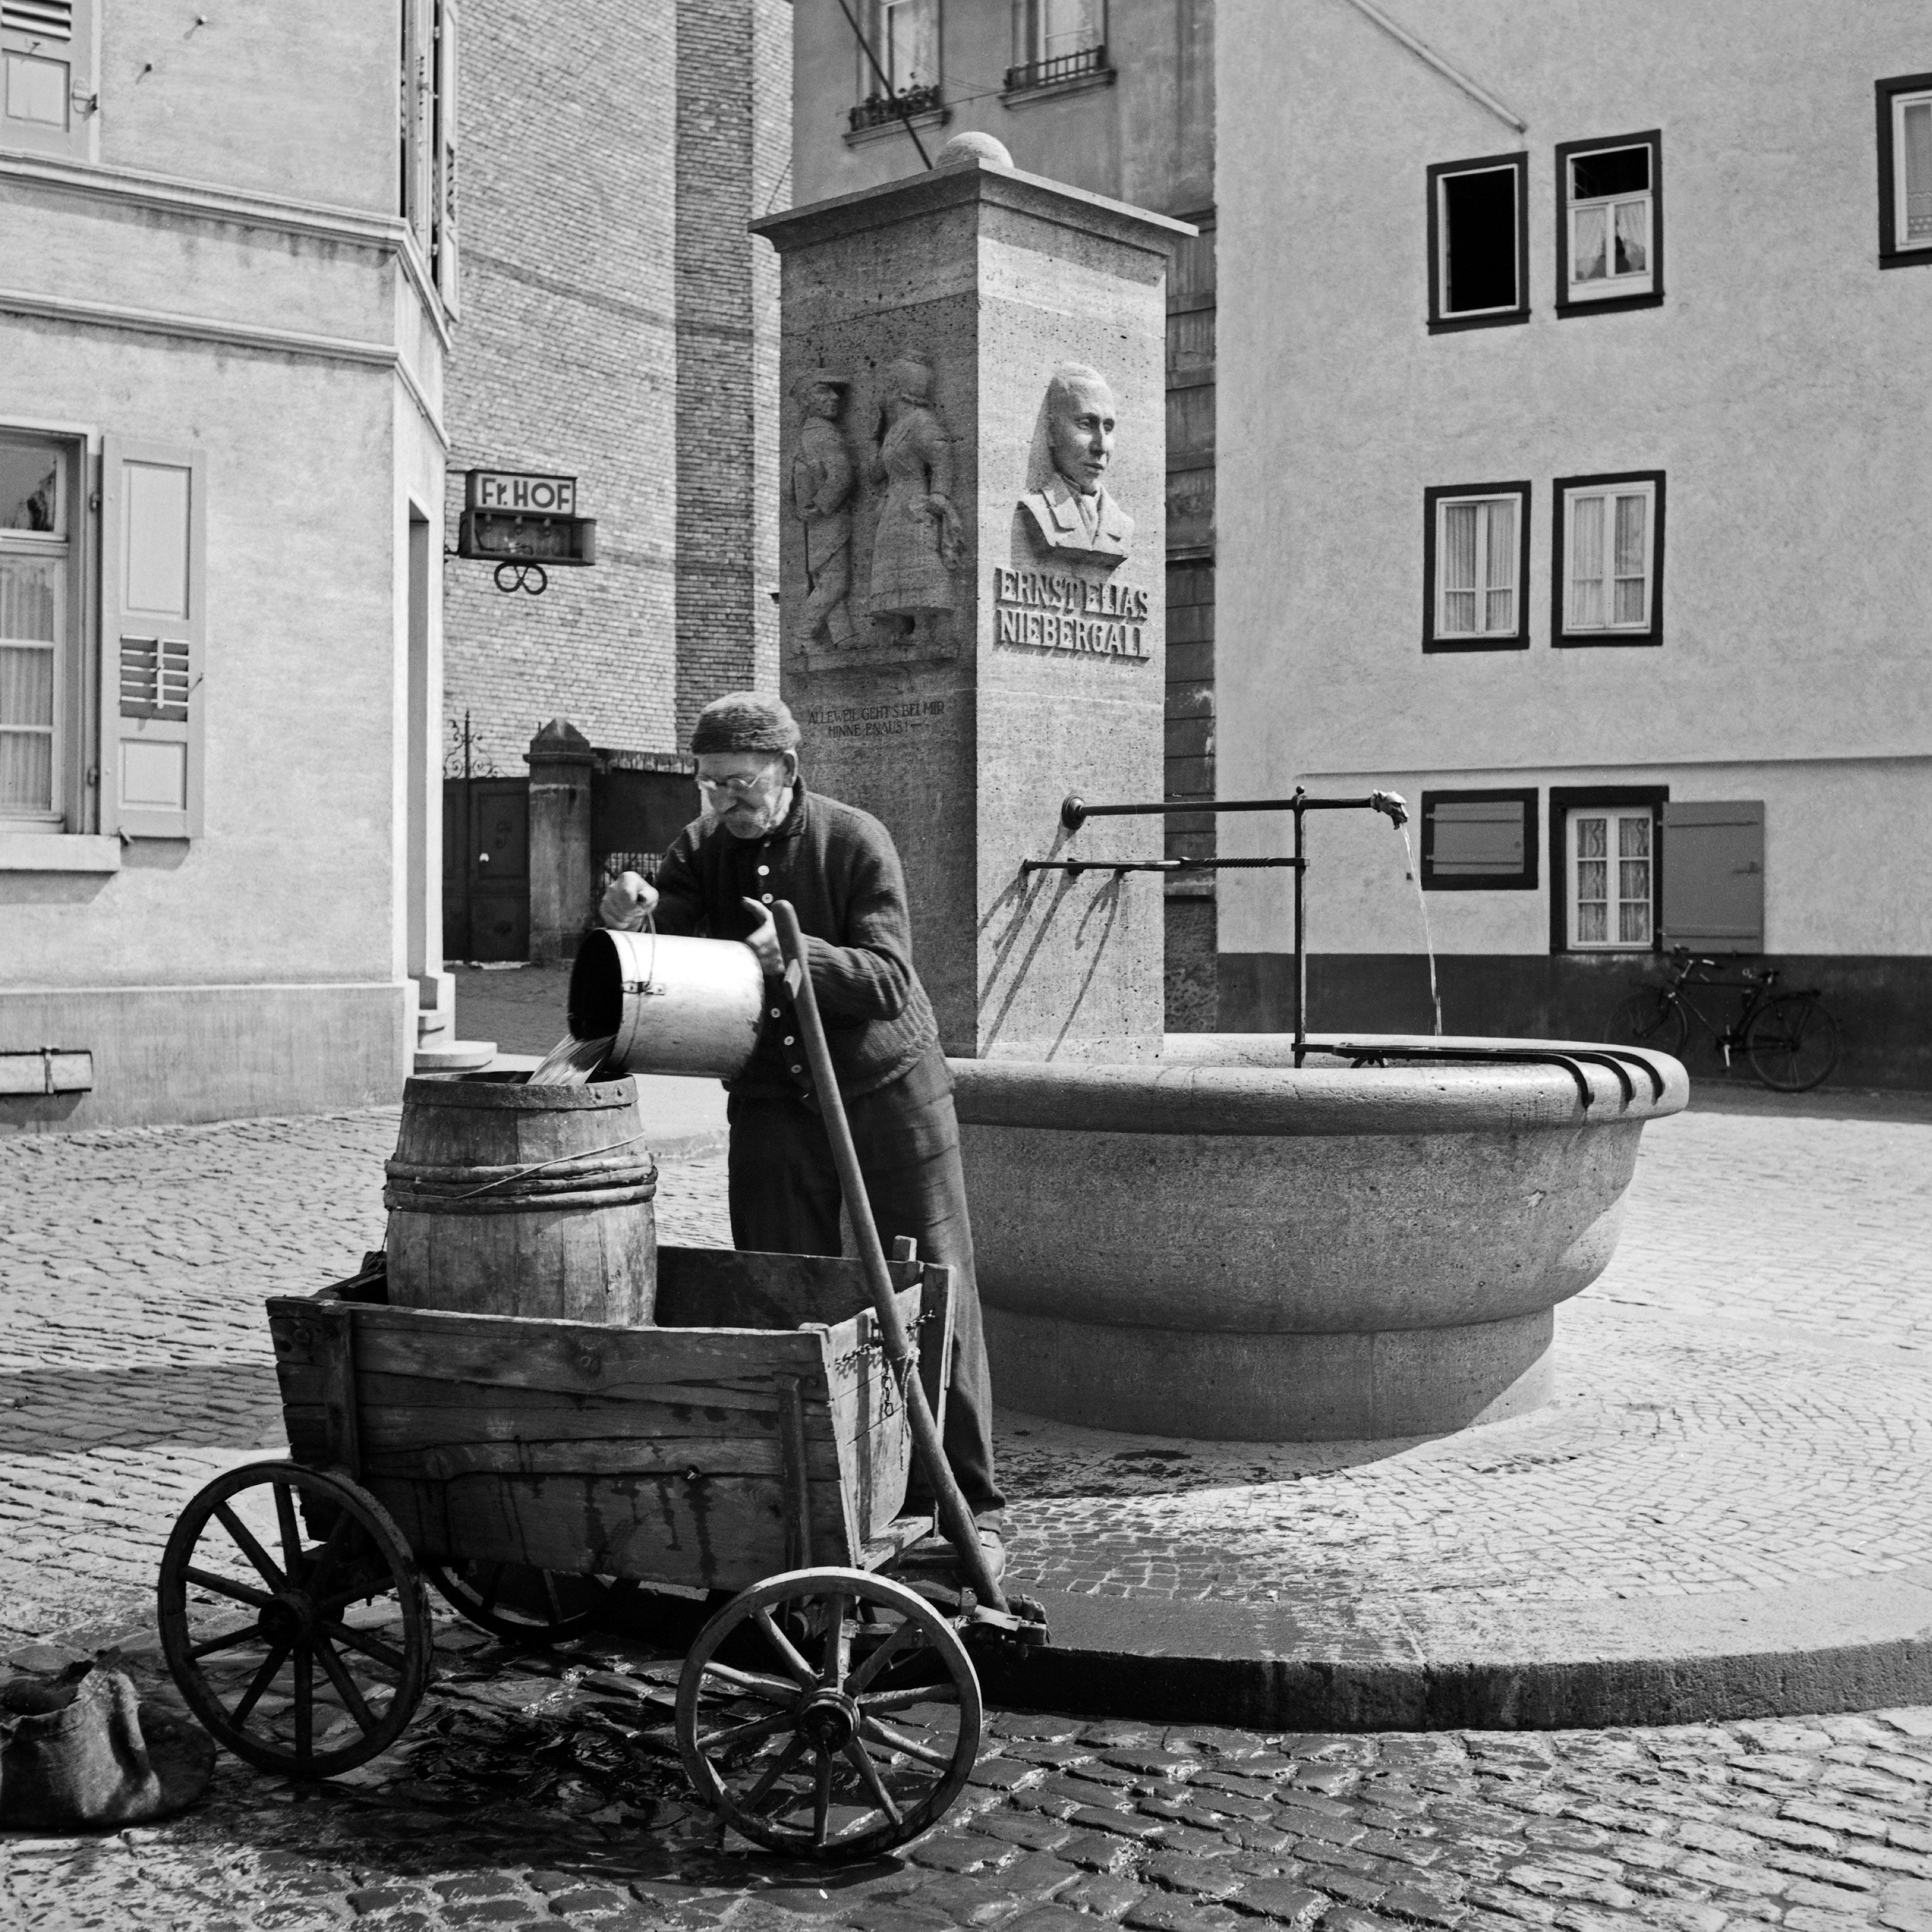 Karl Heinrich Lämmel Black and White Photograph - Man at Ernst Elias Niebergall fountain Darmstadt, Germany 1938 Printed Later 